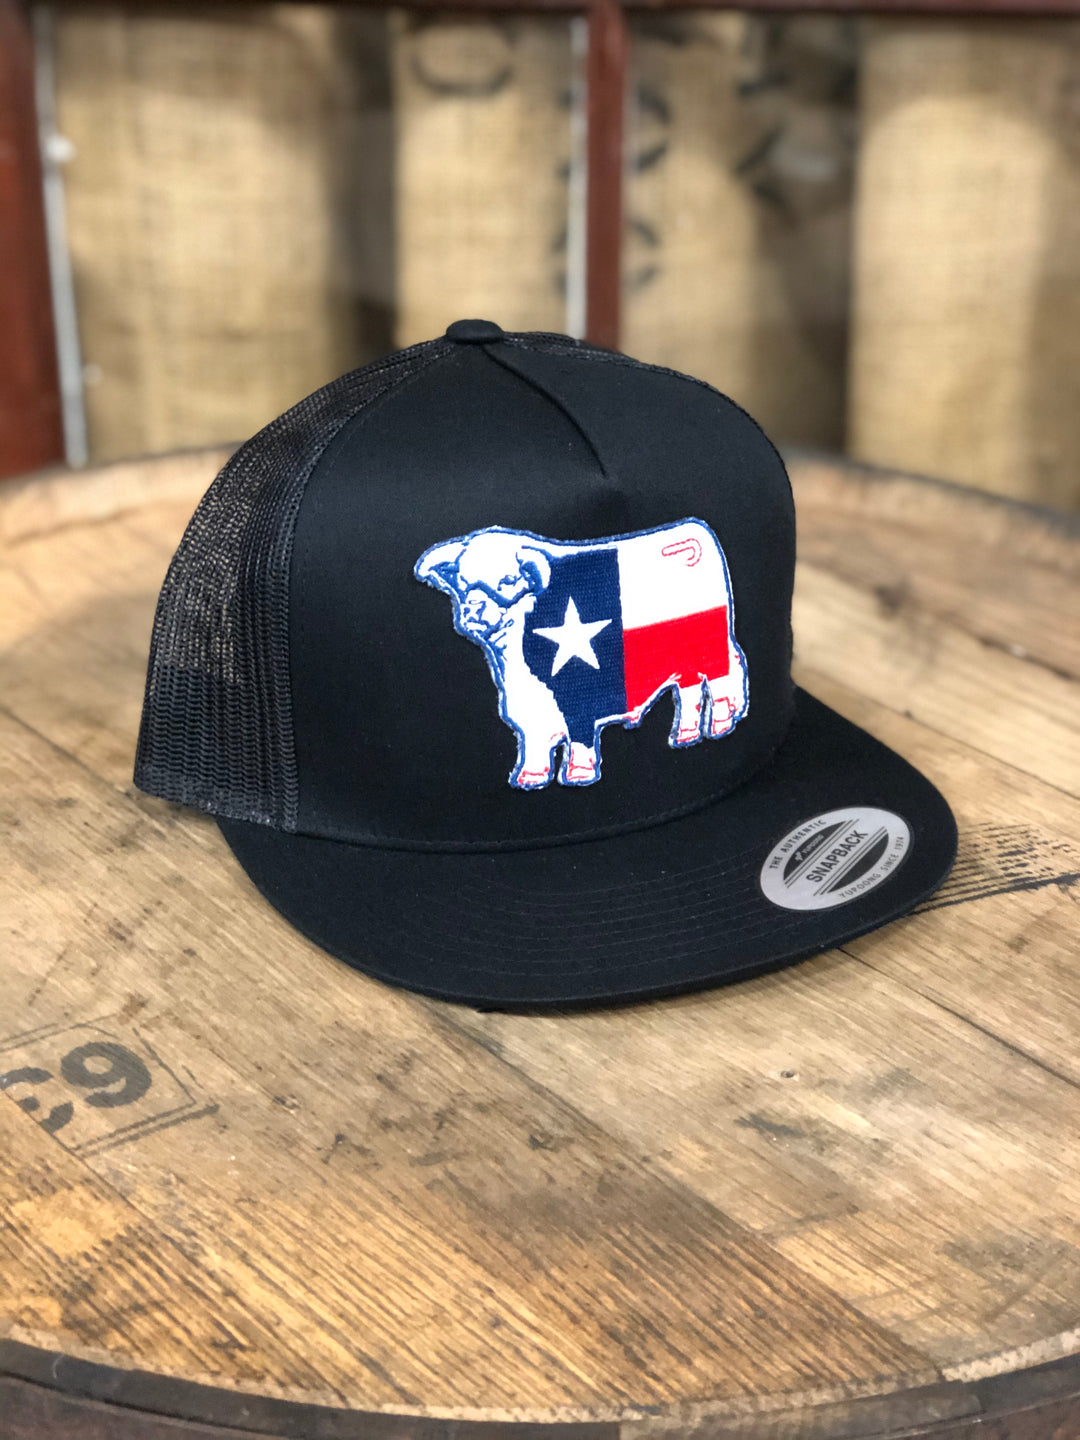 Lazy J Ranch Wear Black & Black 4" Texas Flag Bull Cap